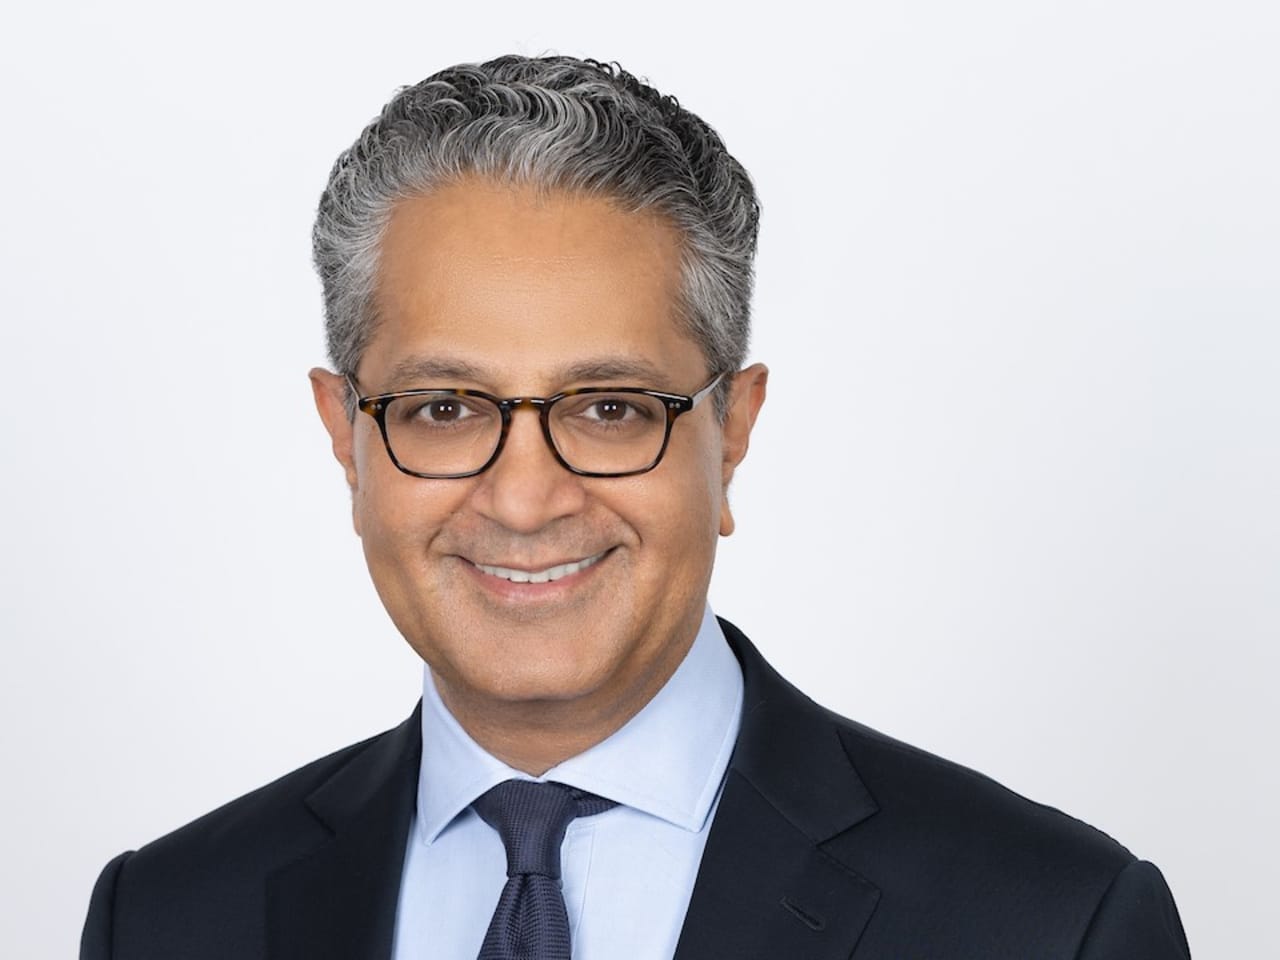 #Who is Salim Ramji, the new Vanguard CEO?